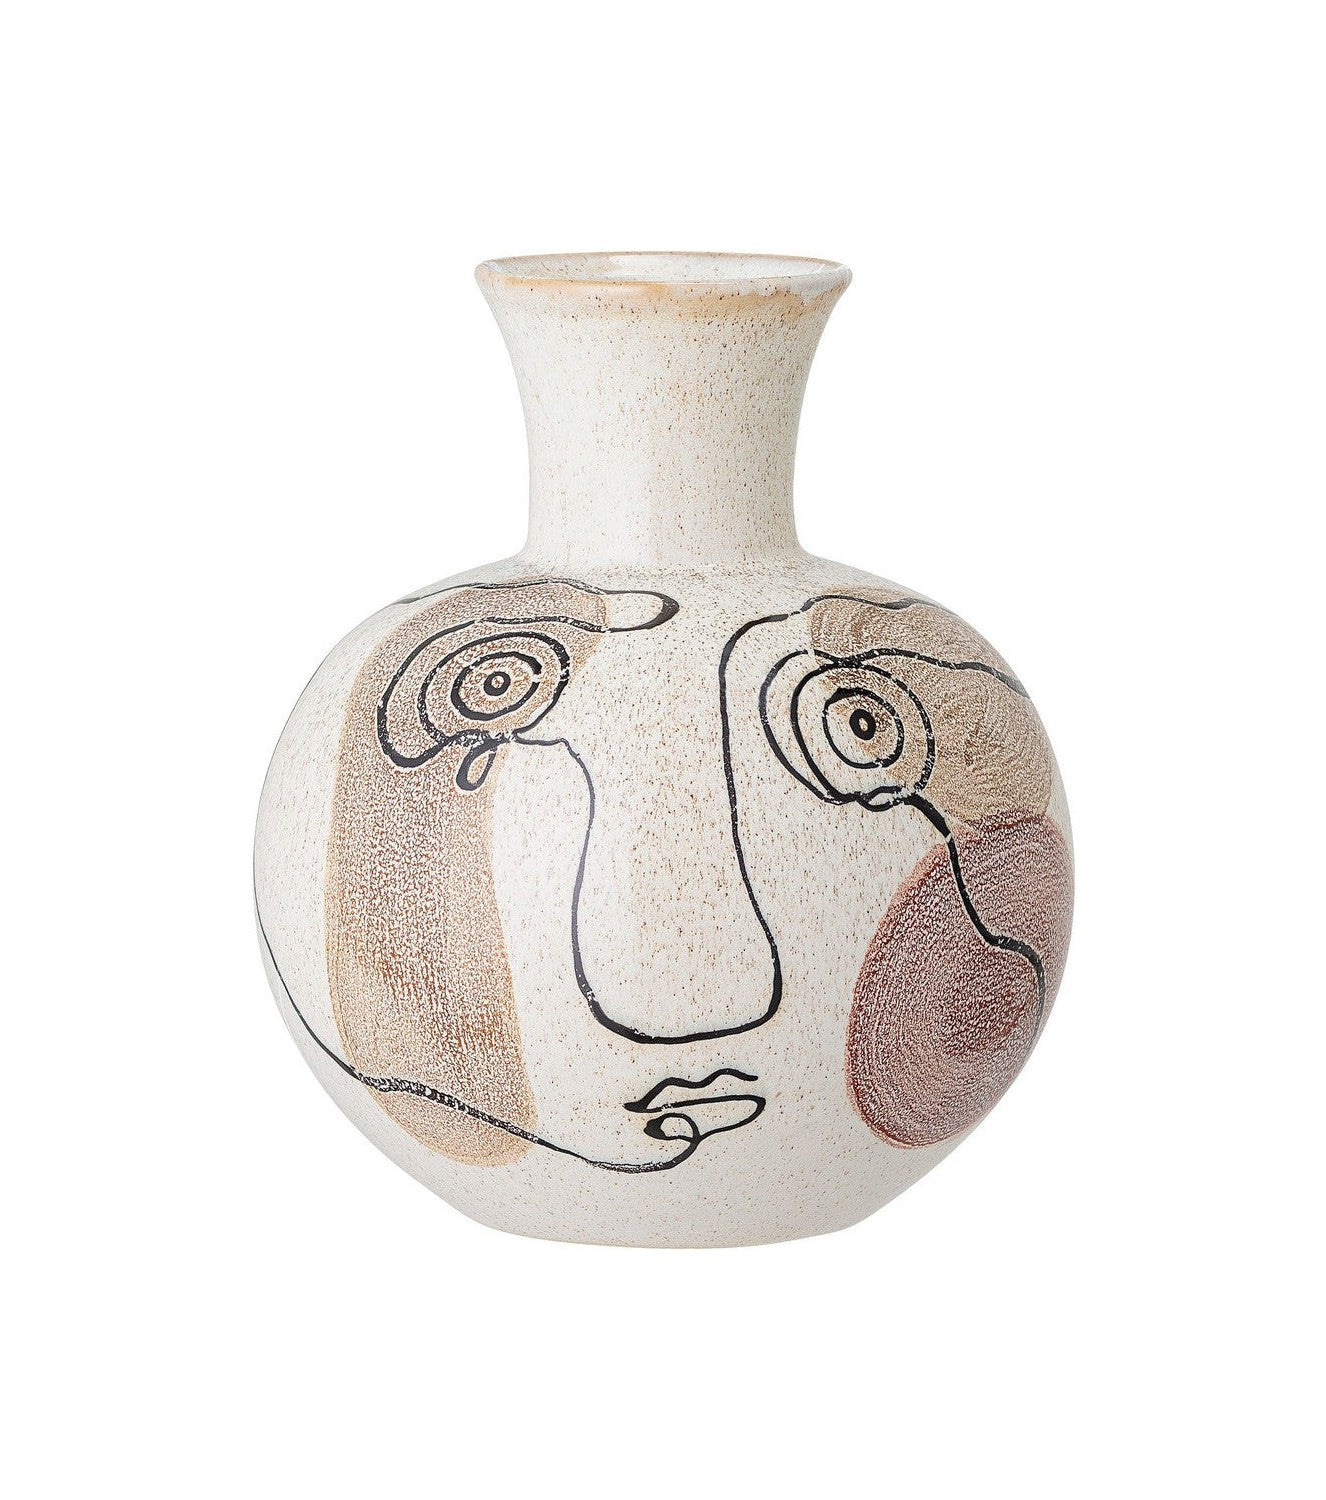 Bloomingville Irini Vase, White, Stoneware